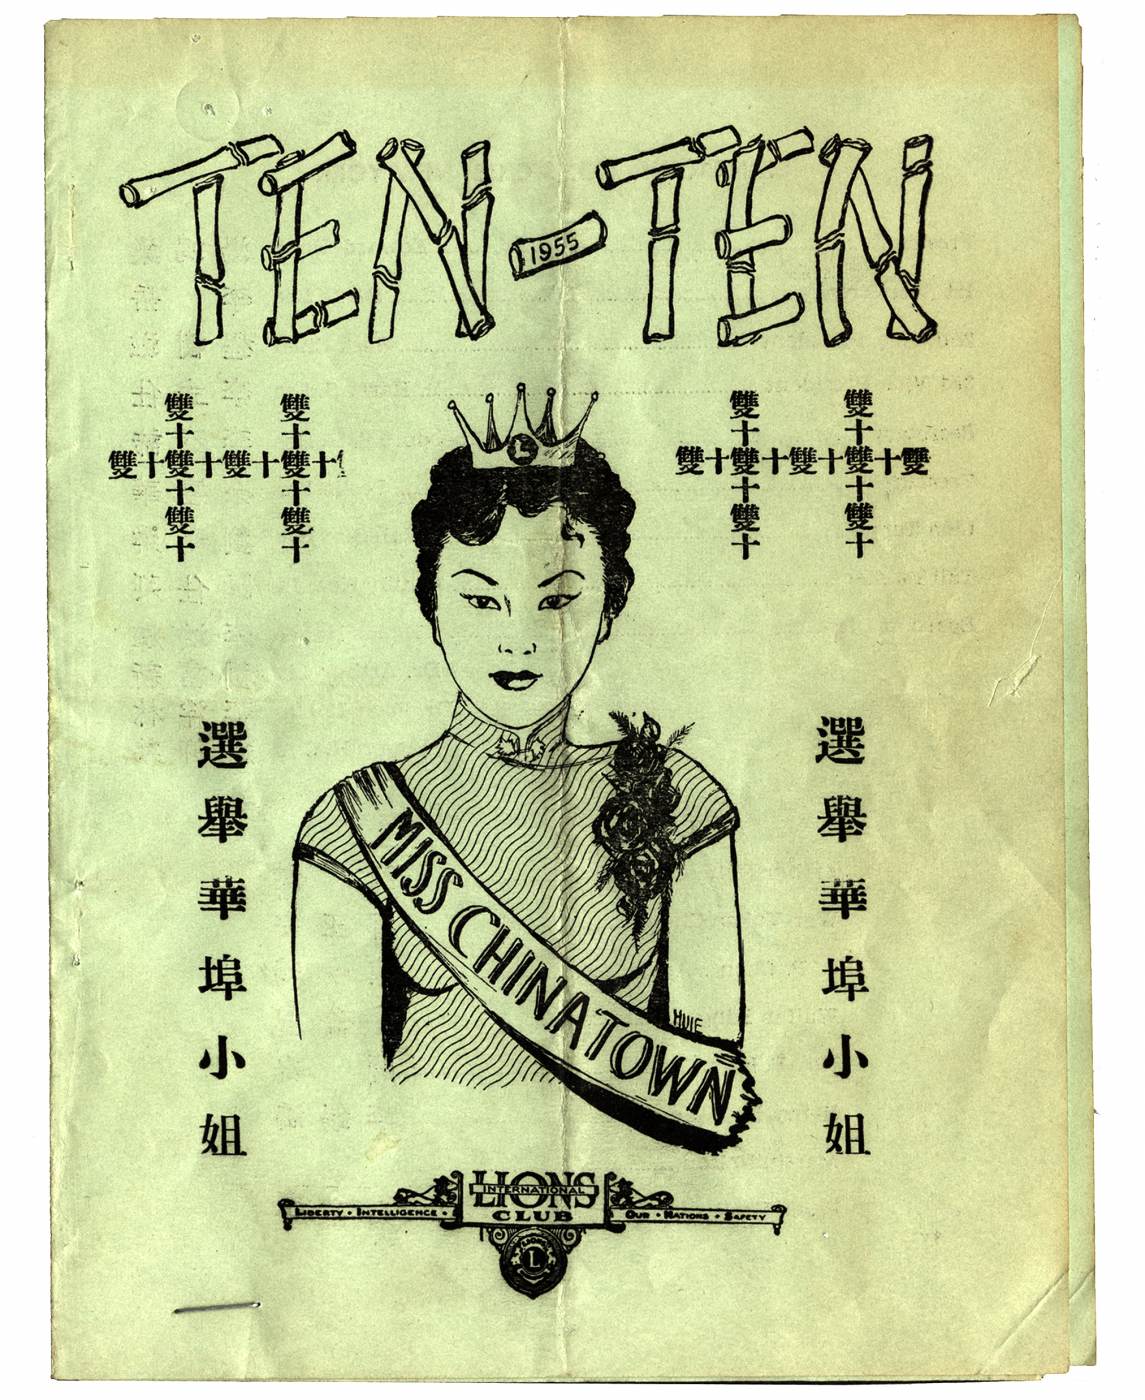 13 August 2019 Posted.
The Miss Chinatown 1955 Pageant program pamphlet, Courtesy of Douglas J. Chu, Museum of Chinese in America (MOCA) Collection.
1955年华埠小姐竞选节目单，Douglas J. Chu捐赠，美国华人博物馆（MOCA）馆藏